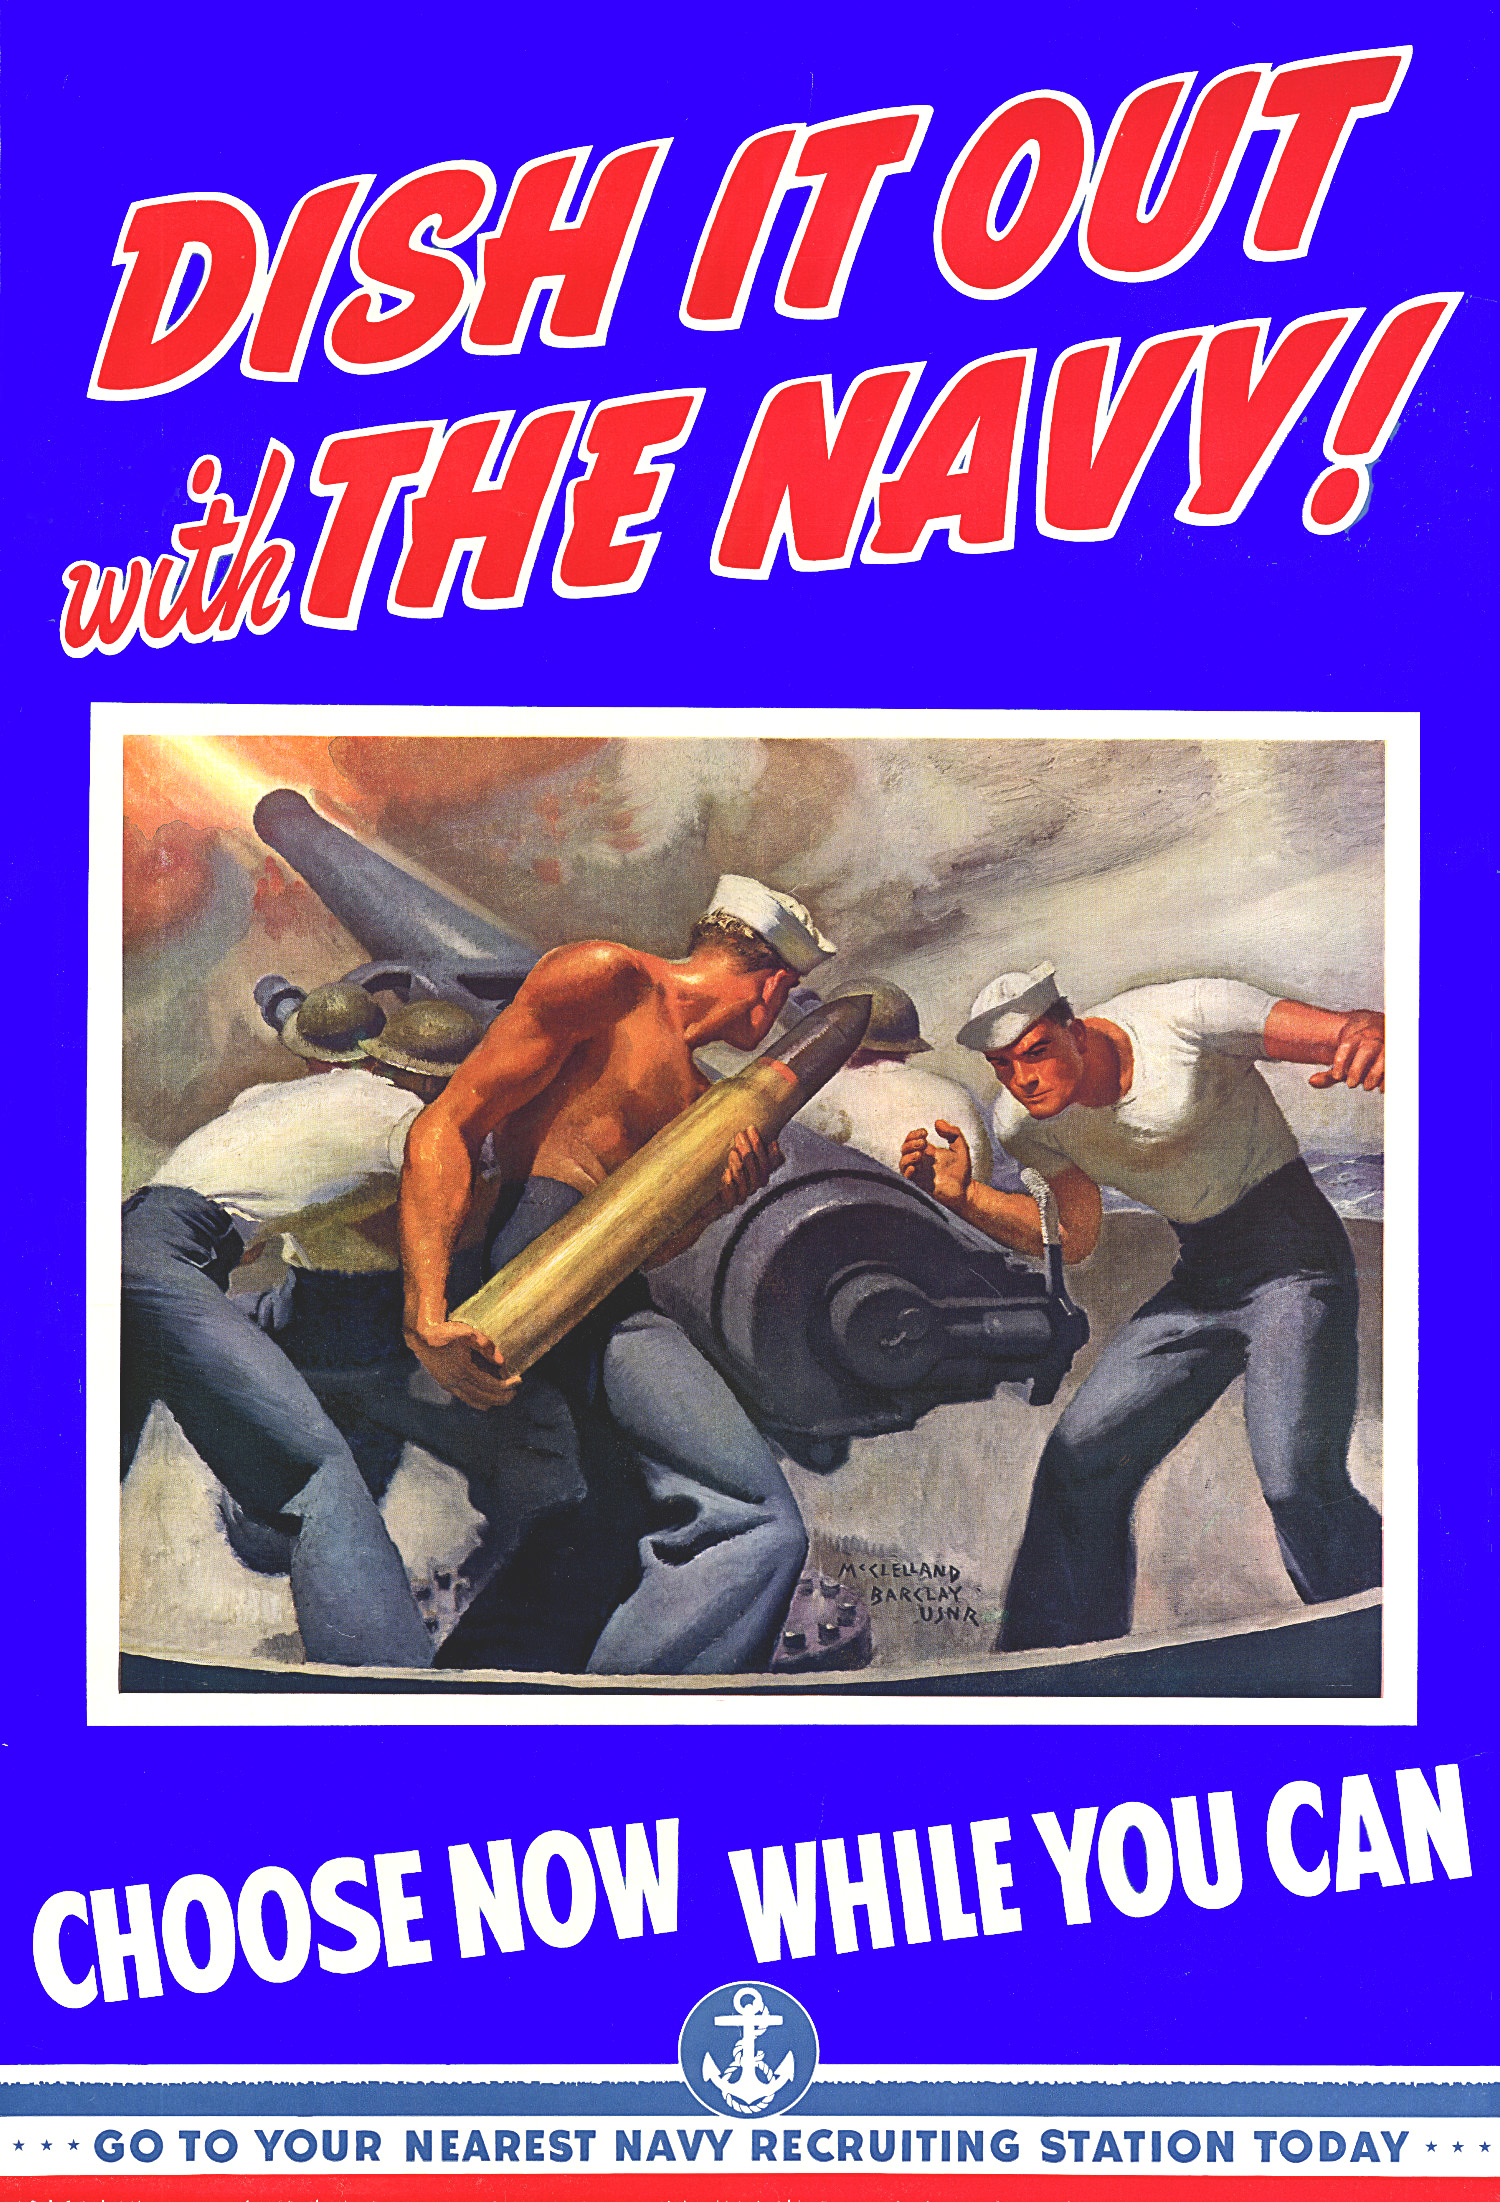 world war ii navy | eBay - Electronics,.